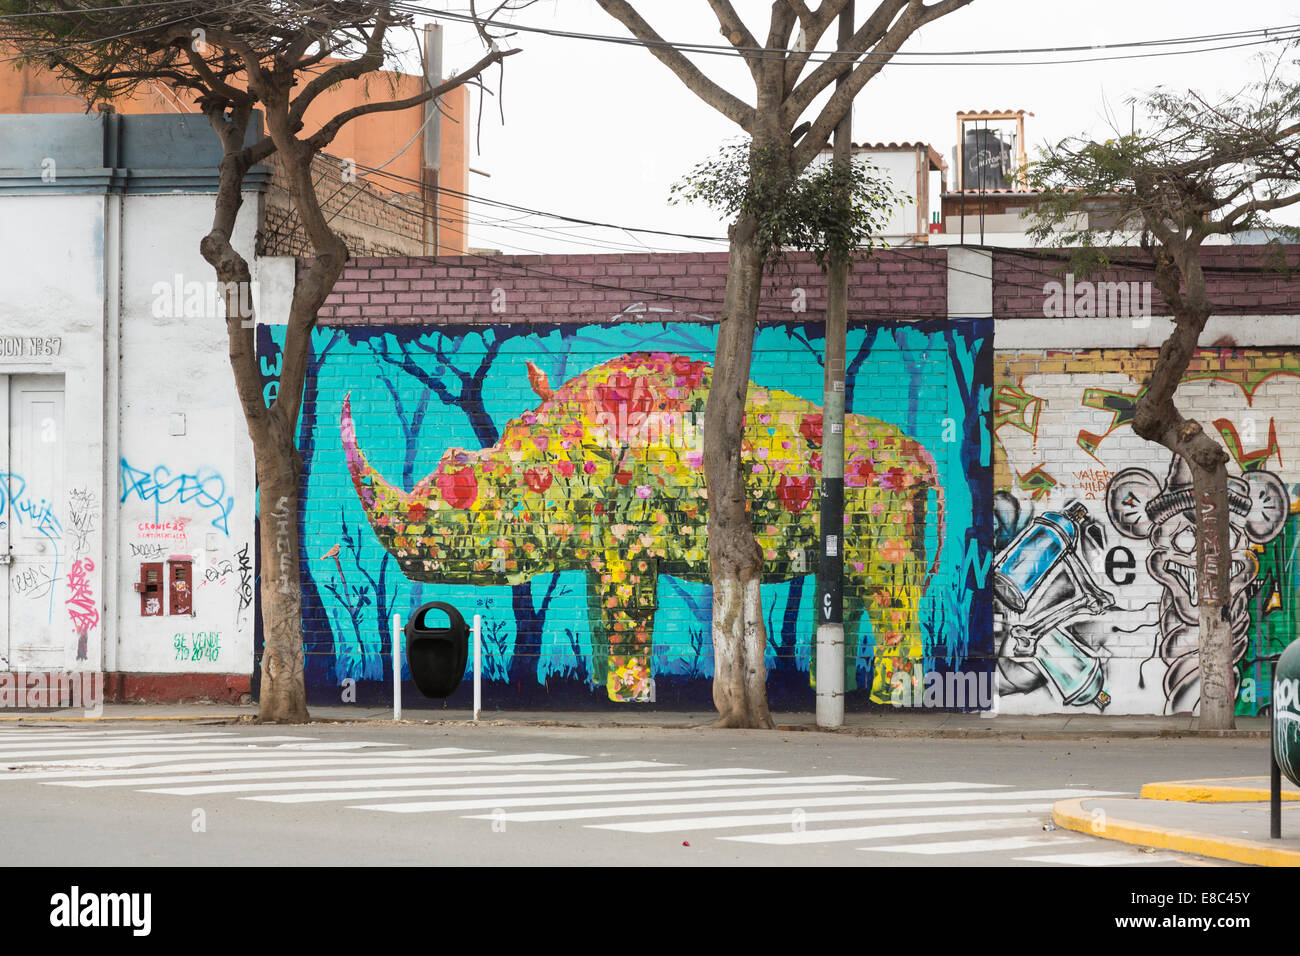 Urban art: Colourful graffiti wall painting of a rhinoceros in a street in Barranco, a suburb of Lima, Peru Stock Photo